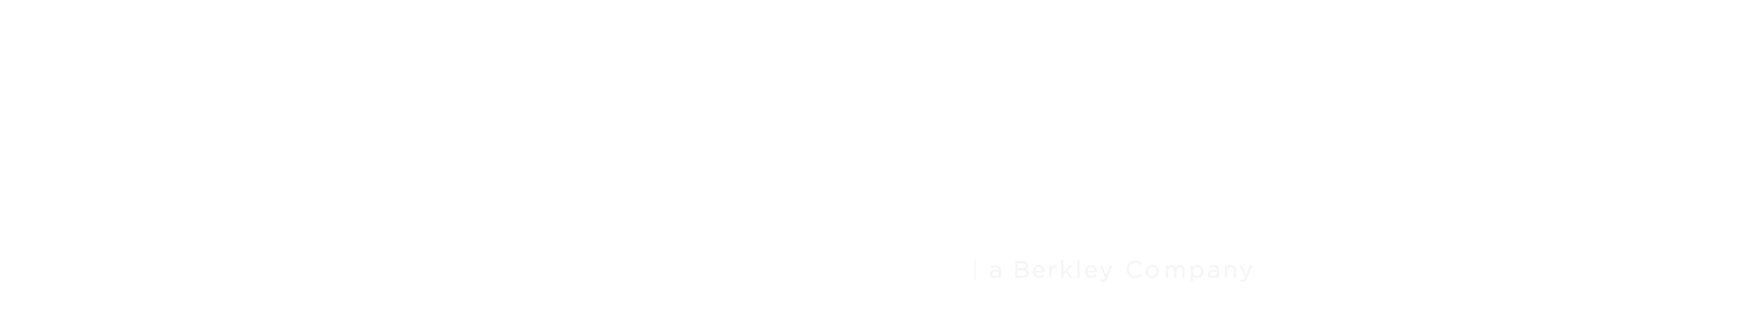 Berkley Human Services logo